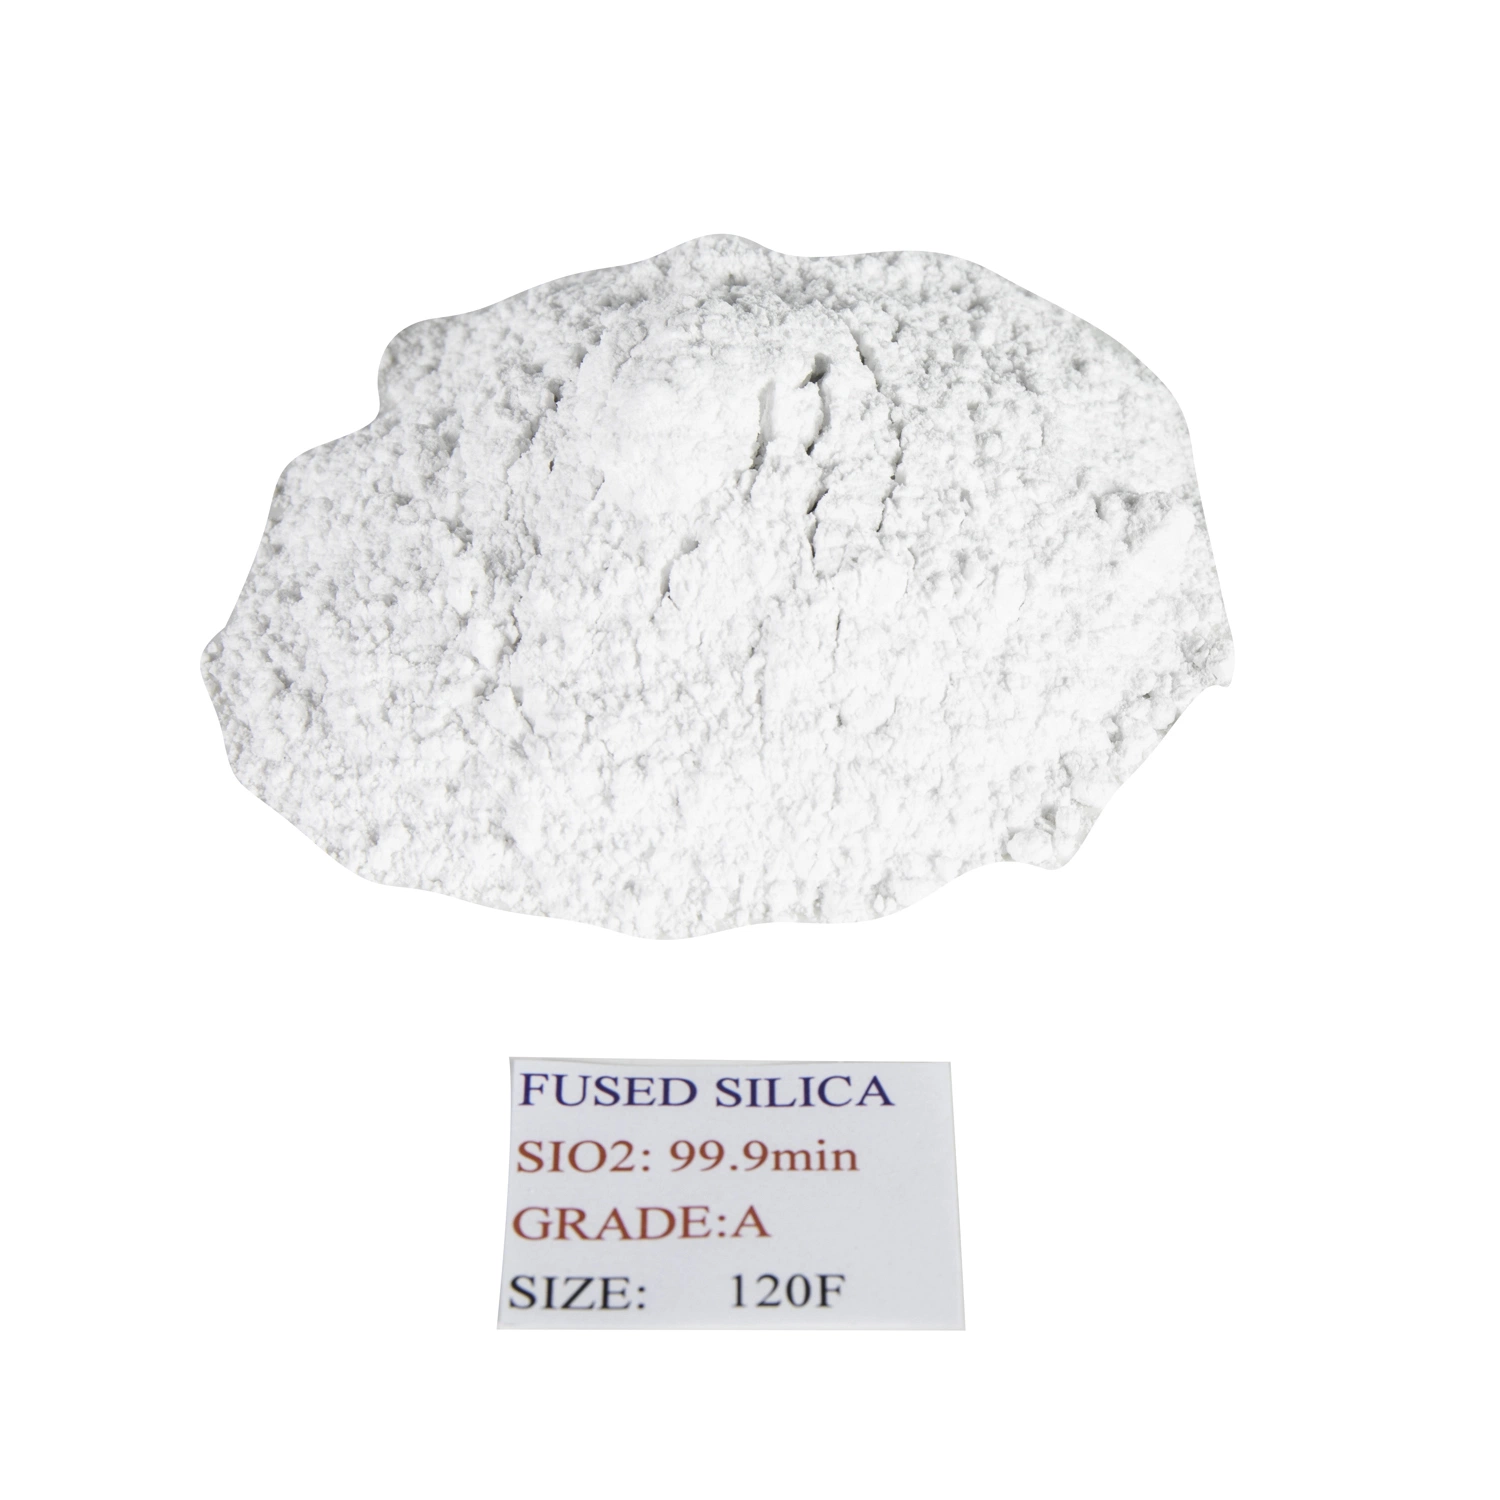 Customized High Purity White Fused Silica Powder 120f Sio2 99.95% Sainuo Quartz